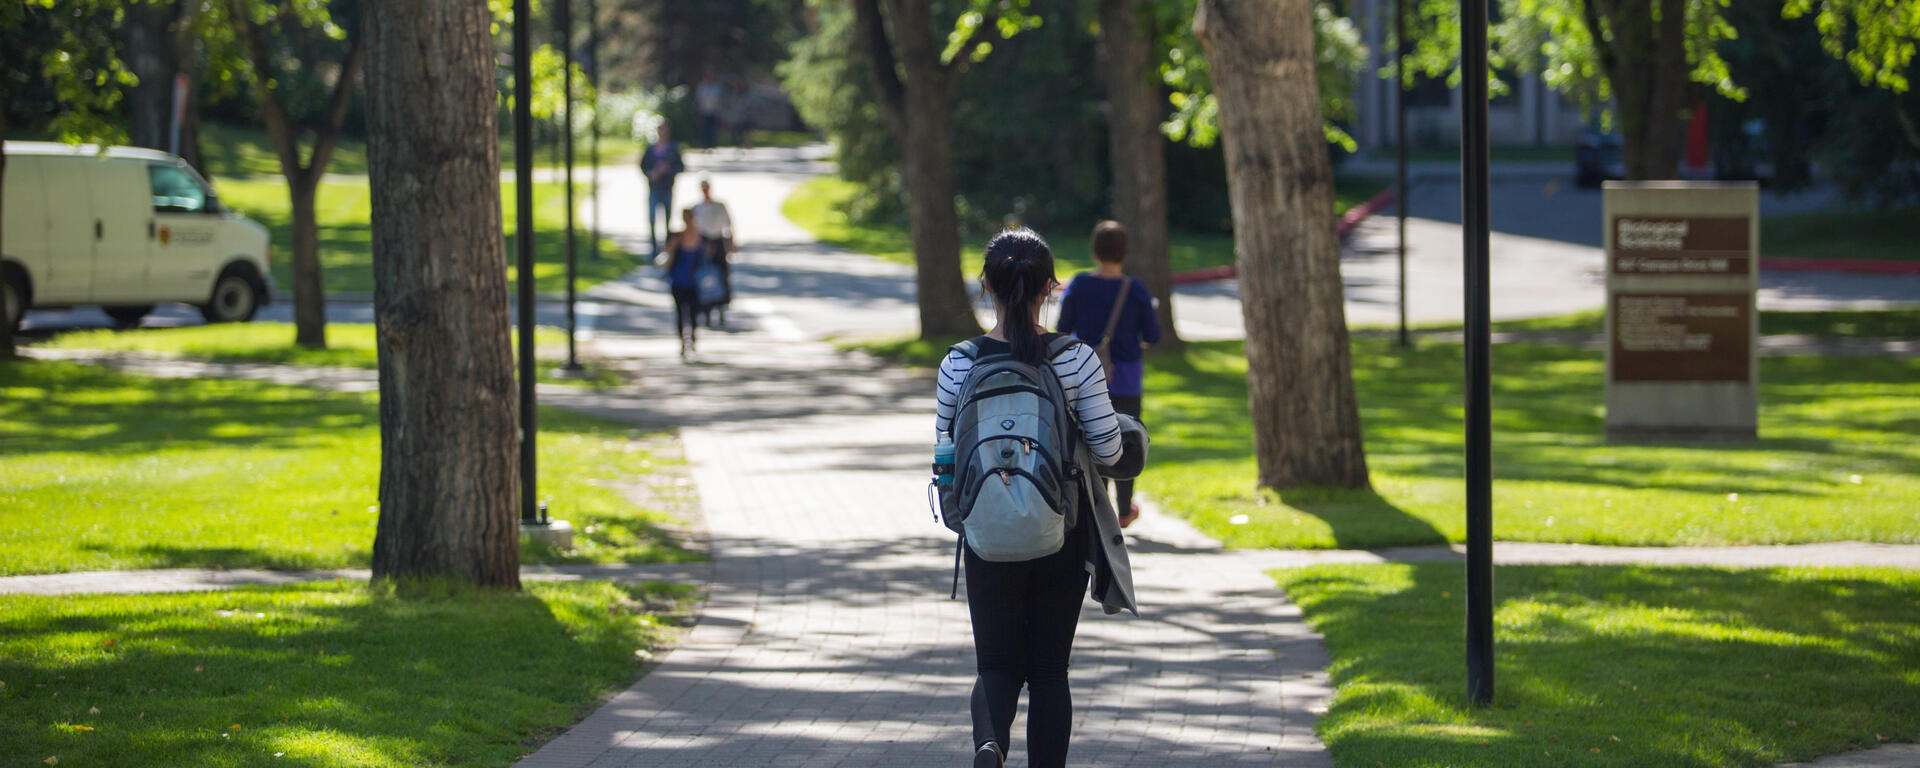 Student walks down a sidewalk on campus in summer